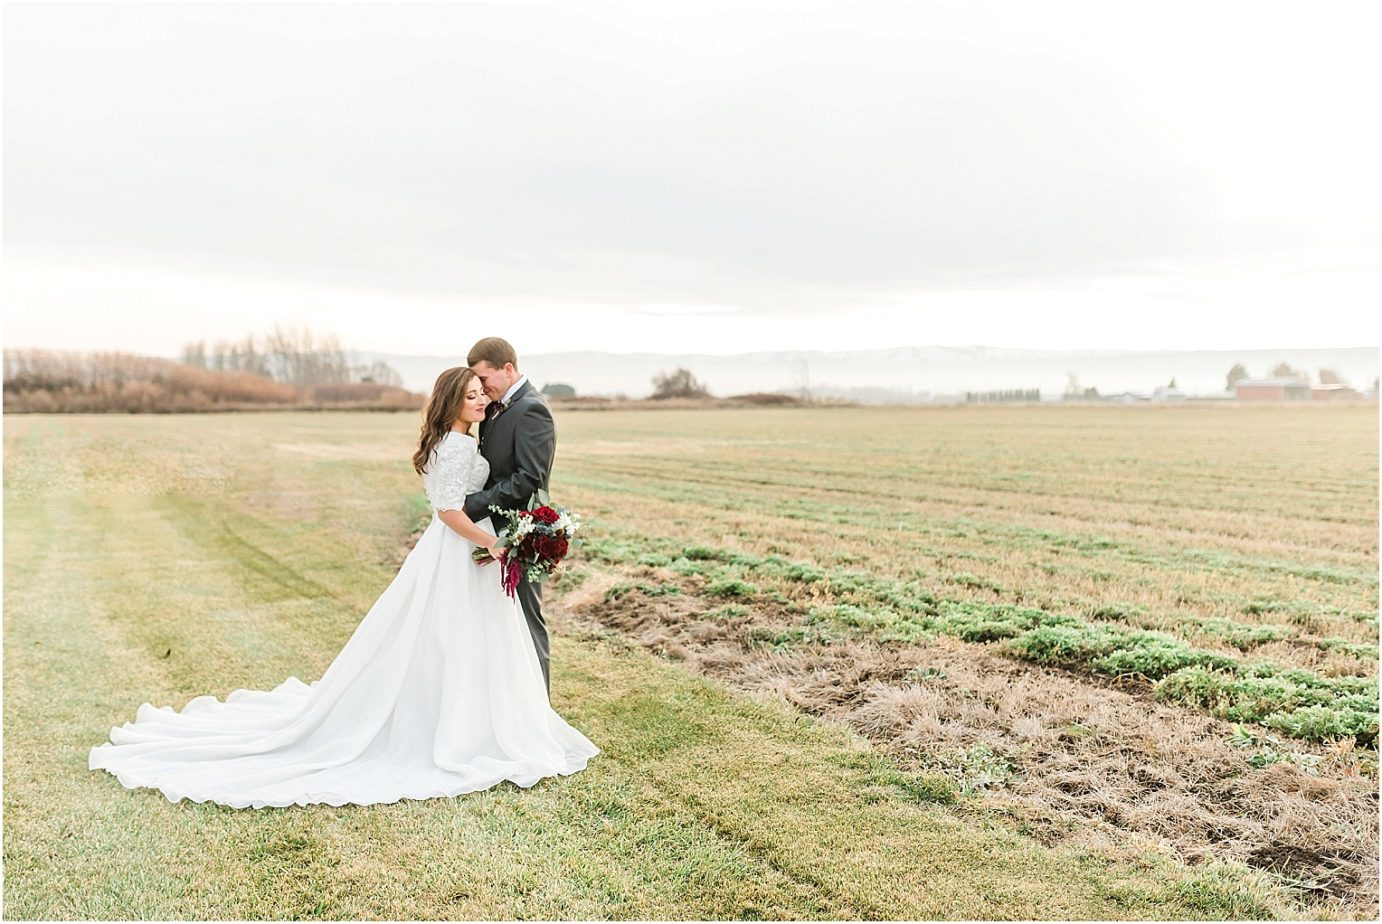 Ellensburg backyard wedding- bride and groom in a field